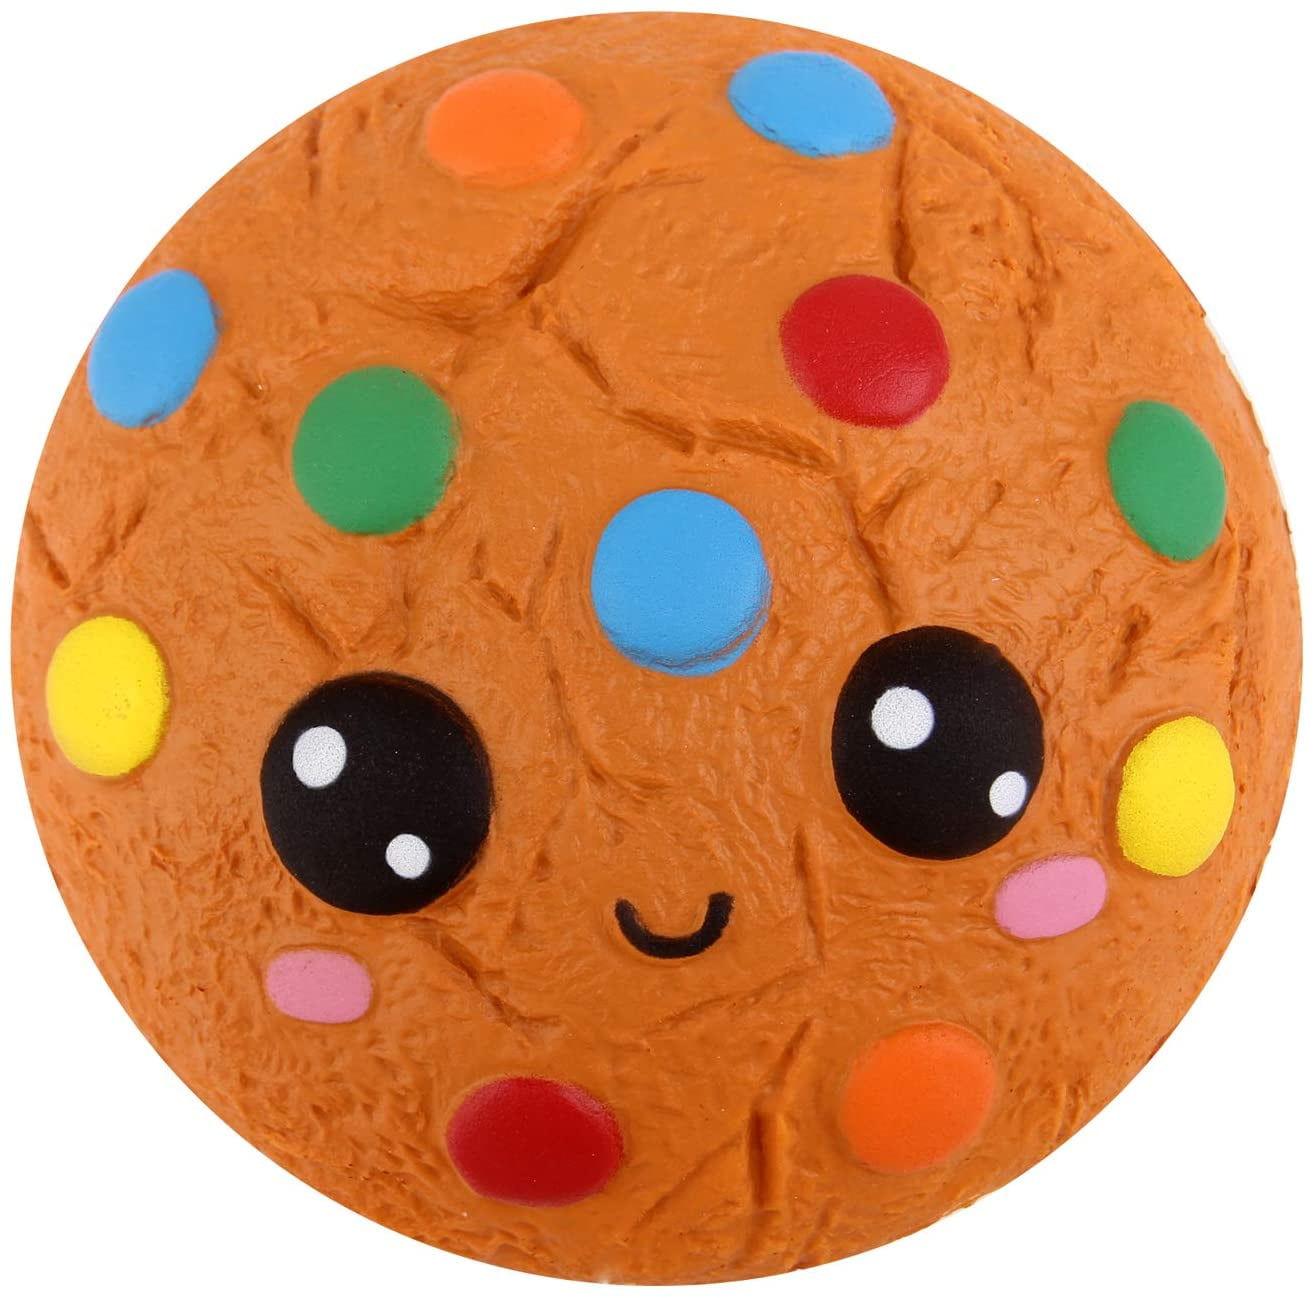 13x5cm, 1 Stück Squishies Chocolate Biscuit Kawaii Slow Steps Squeeze Toy Slow Rising Squishies Anti-Stress Toy Stress Reliever Ball für Kids Adults Über 6 Jahre alt 